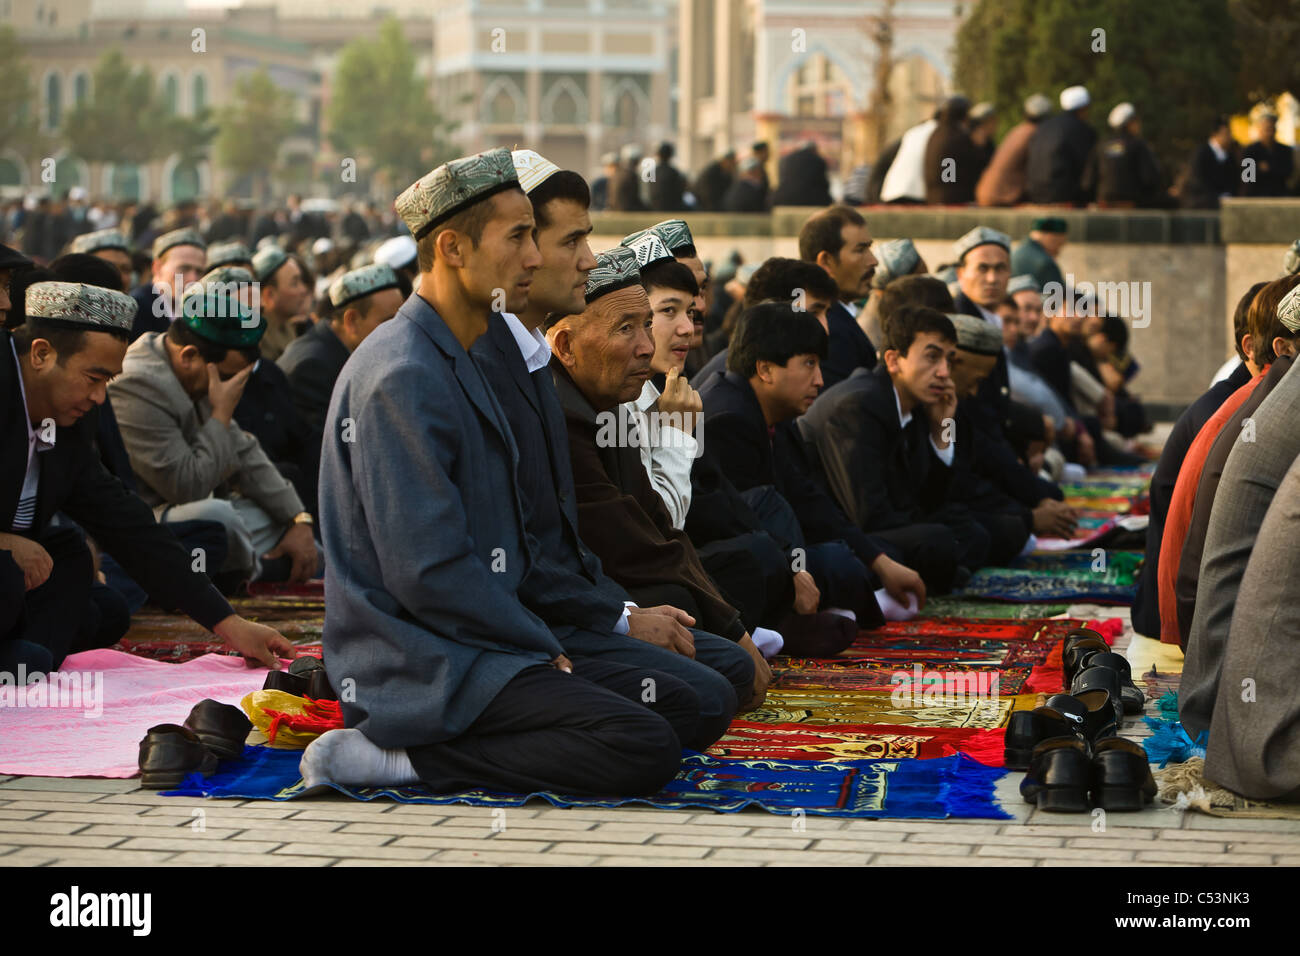 Muslim worshipers kneel on prayer carpets outside of Id Kah Mosque at the end of Ramadan. Kashgar, Xinjiang province, China Stock Photo